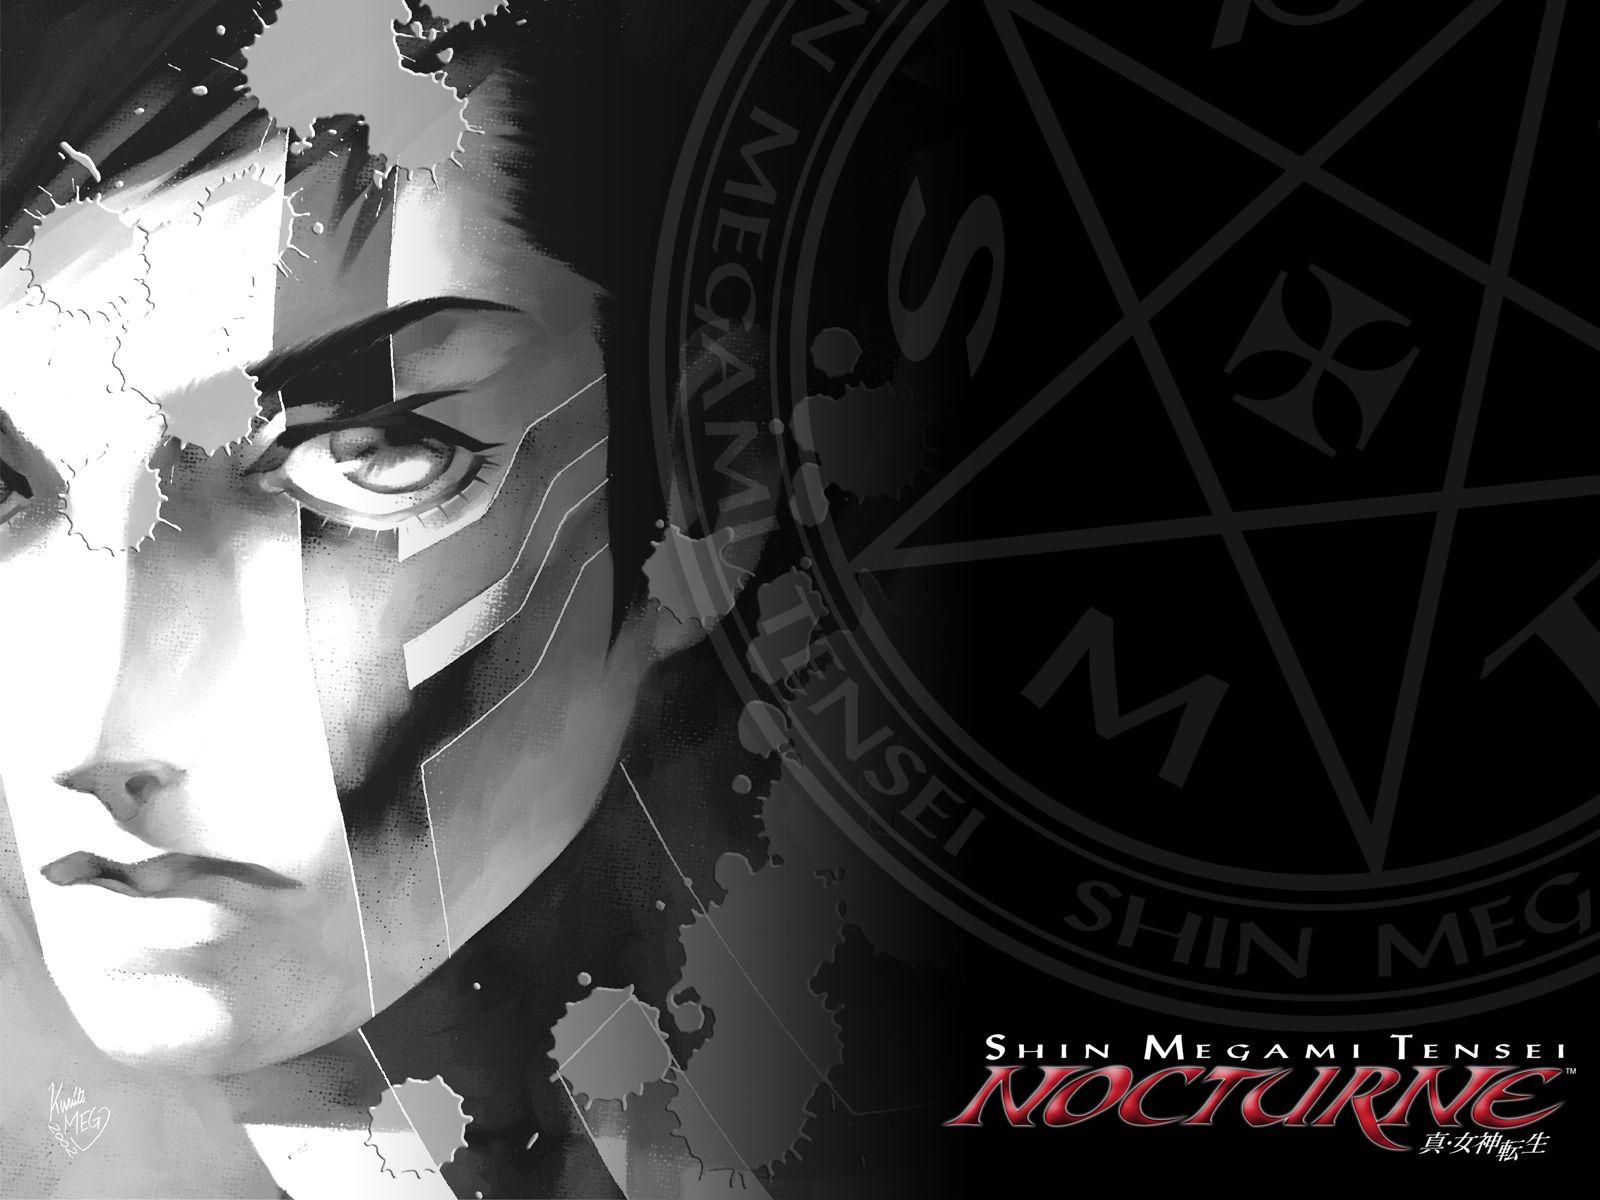 Atlus USA presents Shin Megami Tensei: Nocturne